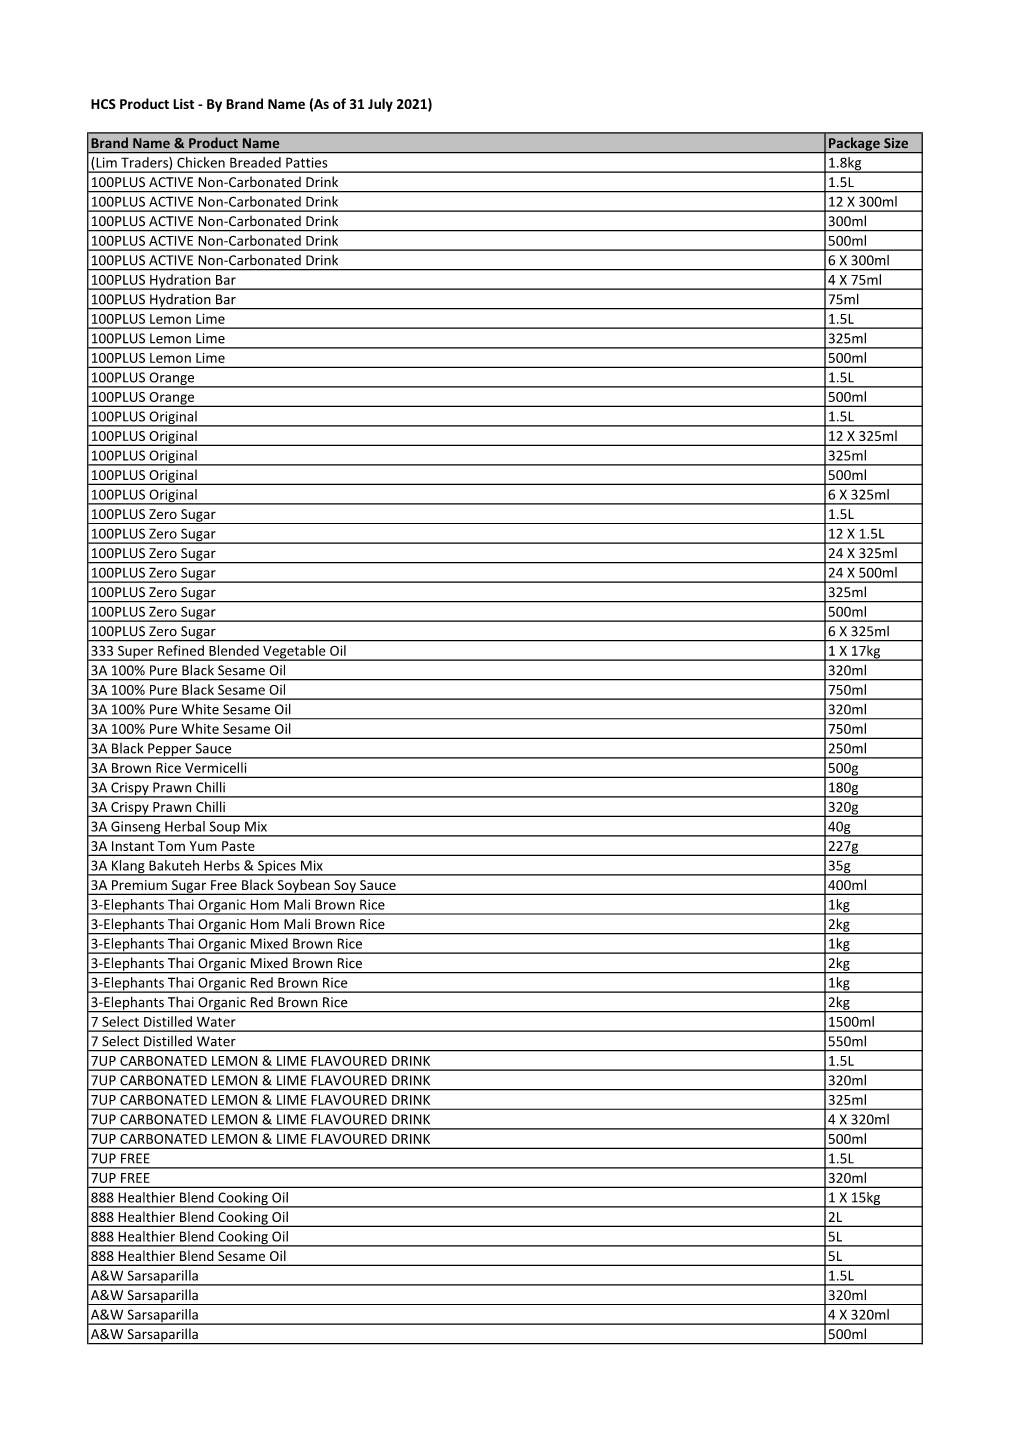 HCS Website List As of 31 July 2021 Working File.Xlsx